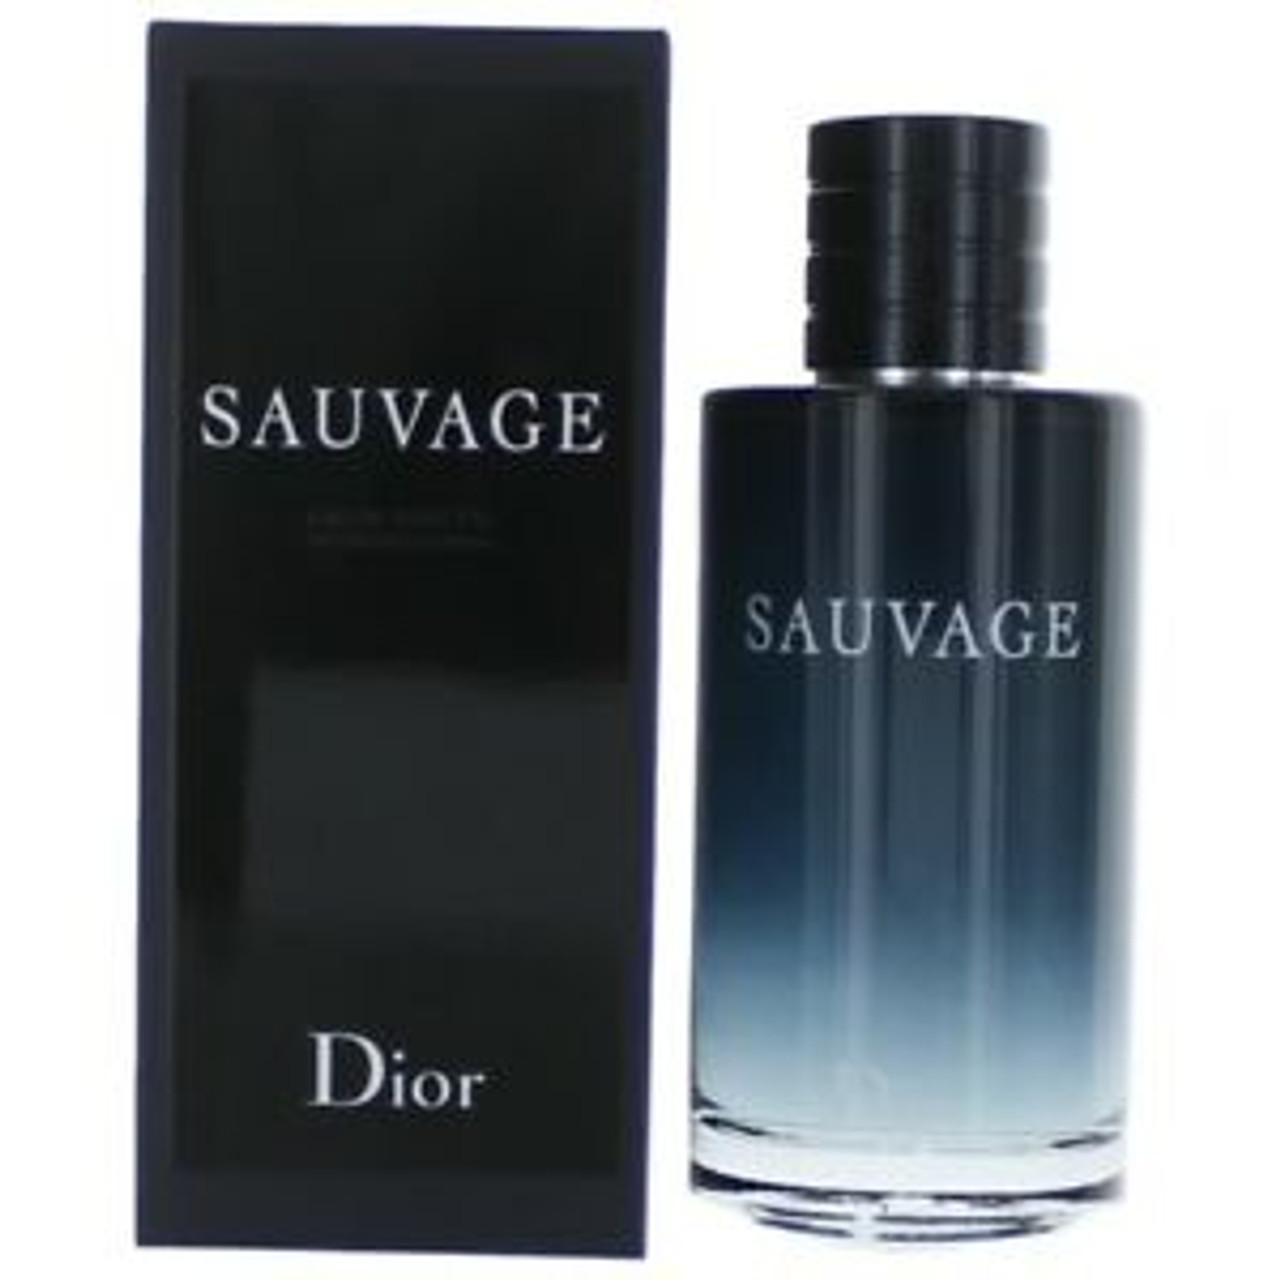 dior fragrance sauvage